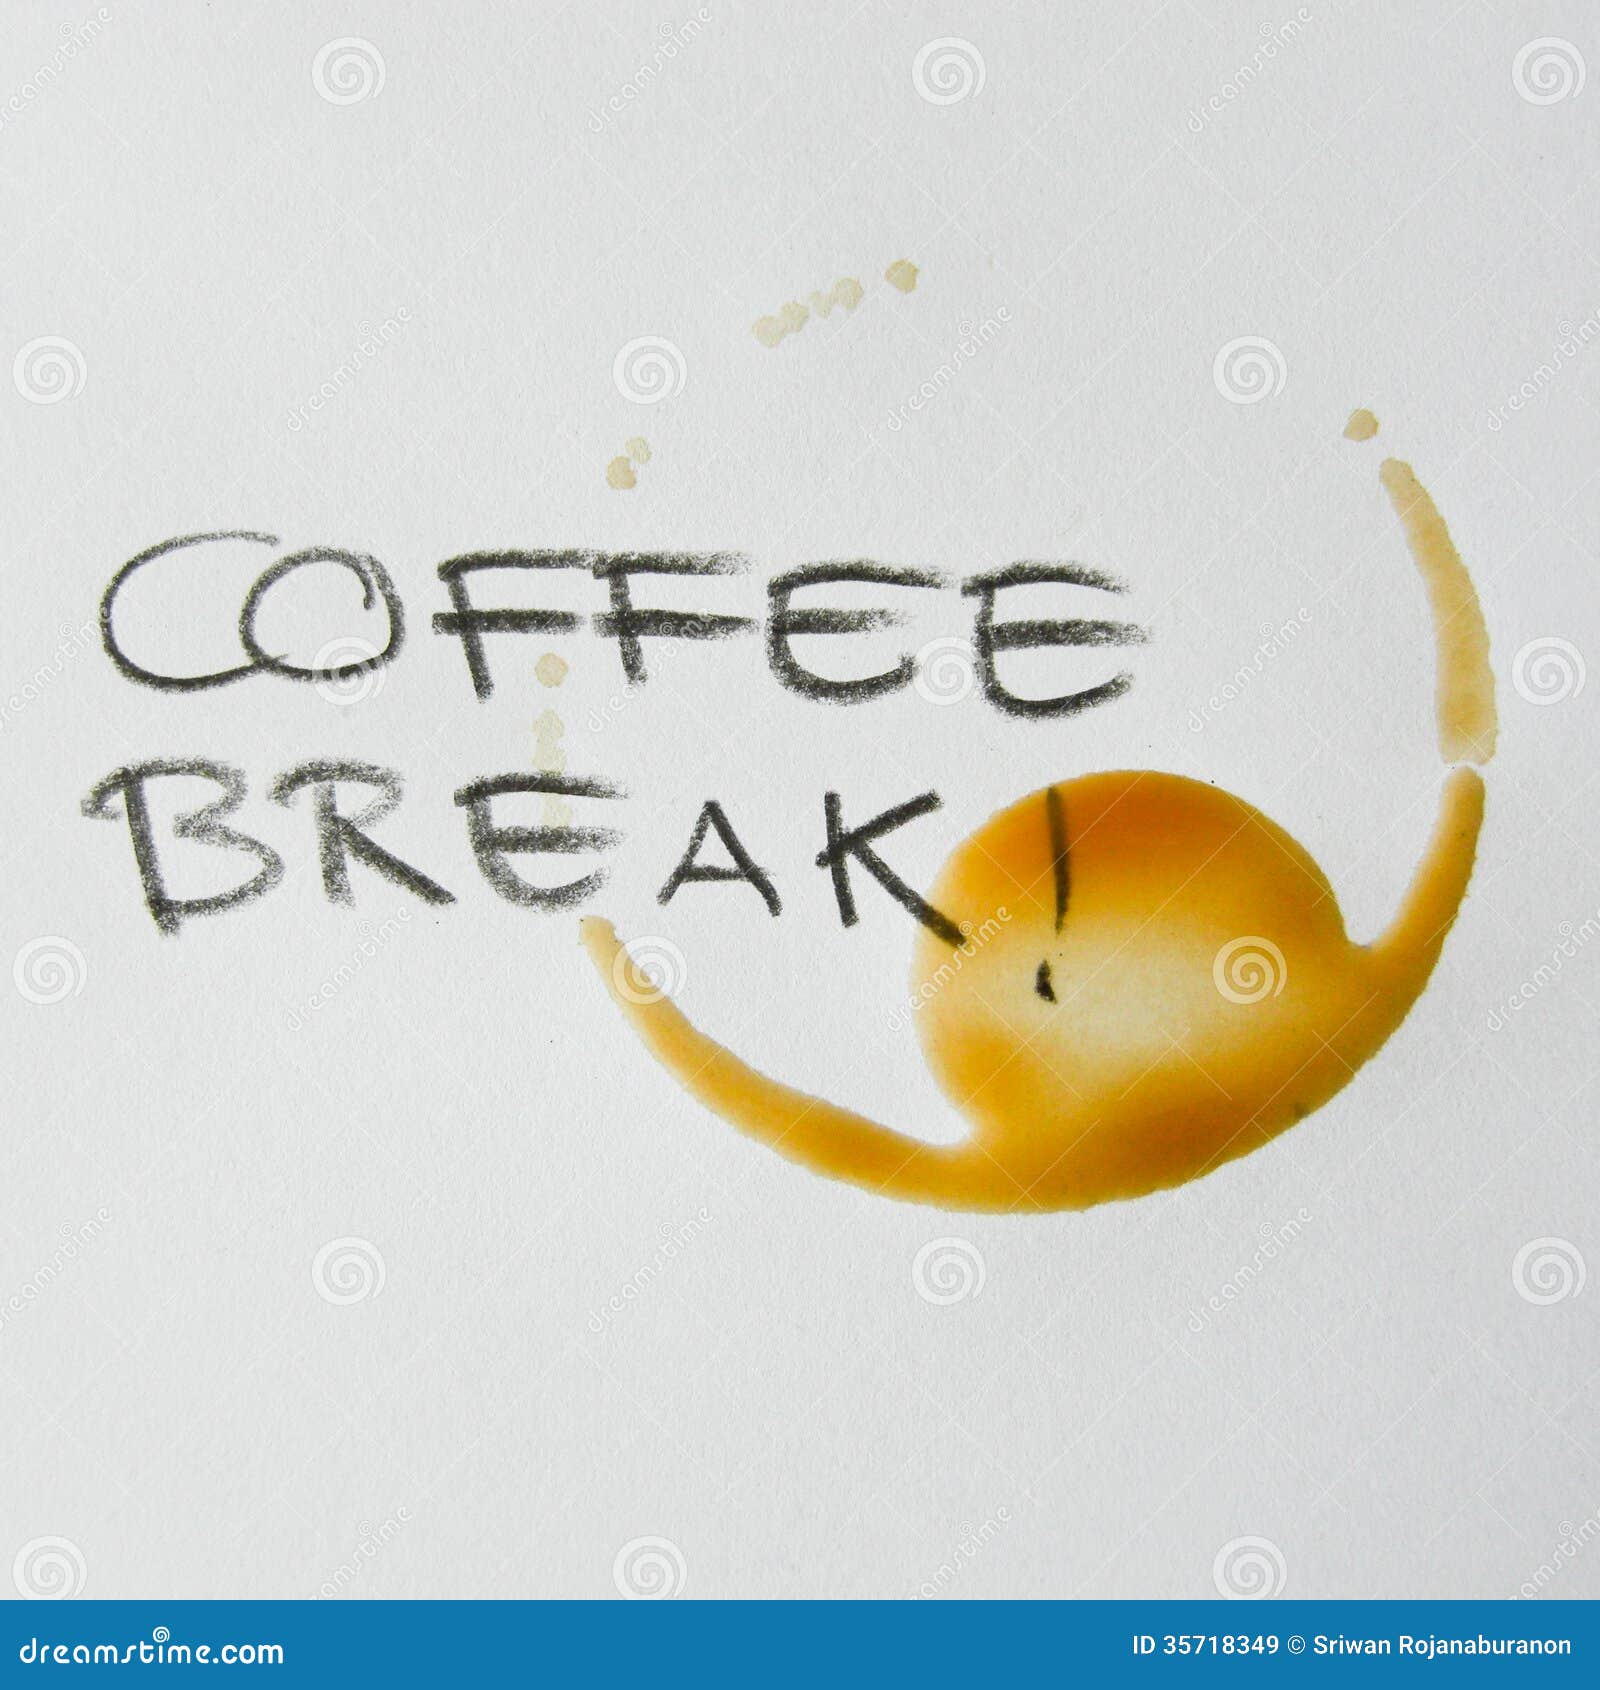 free clipart coffee break - photo #31